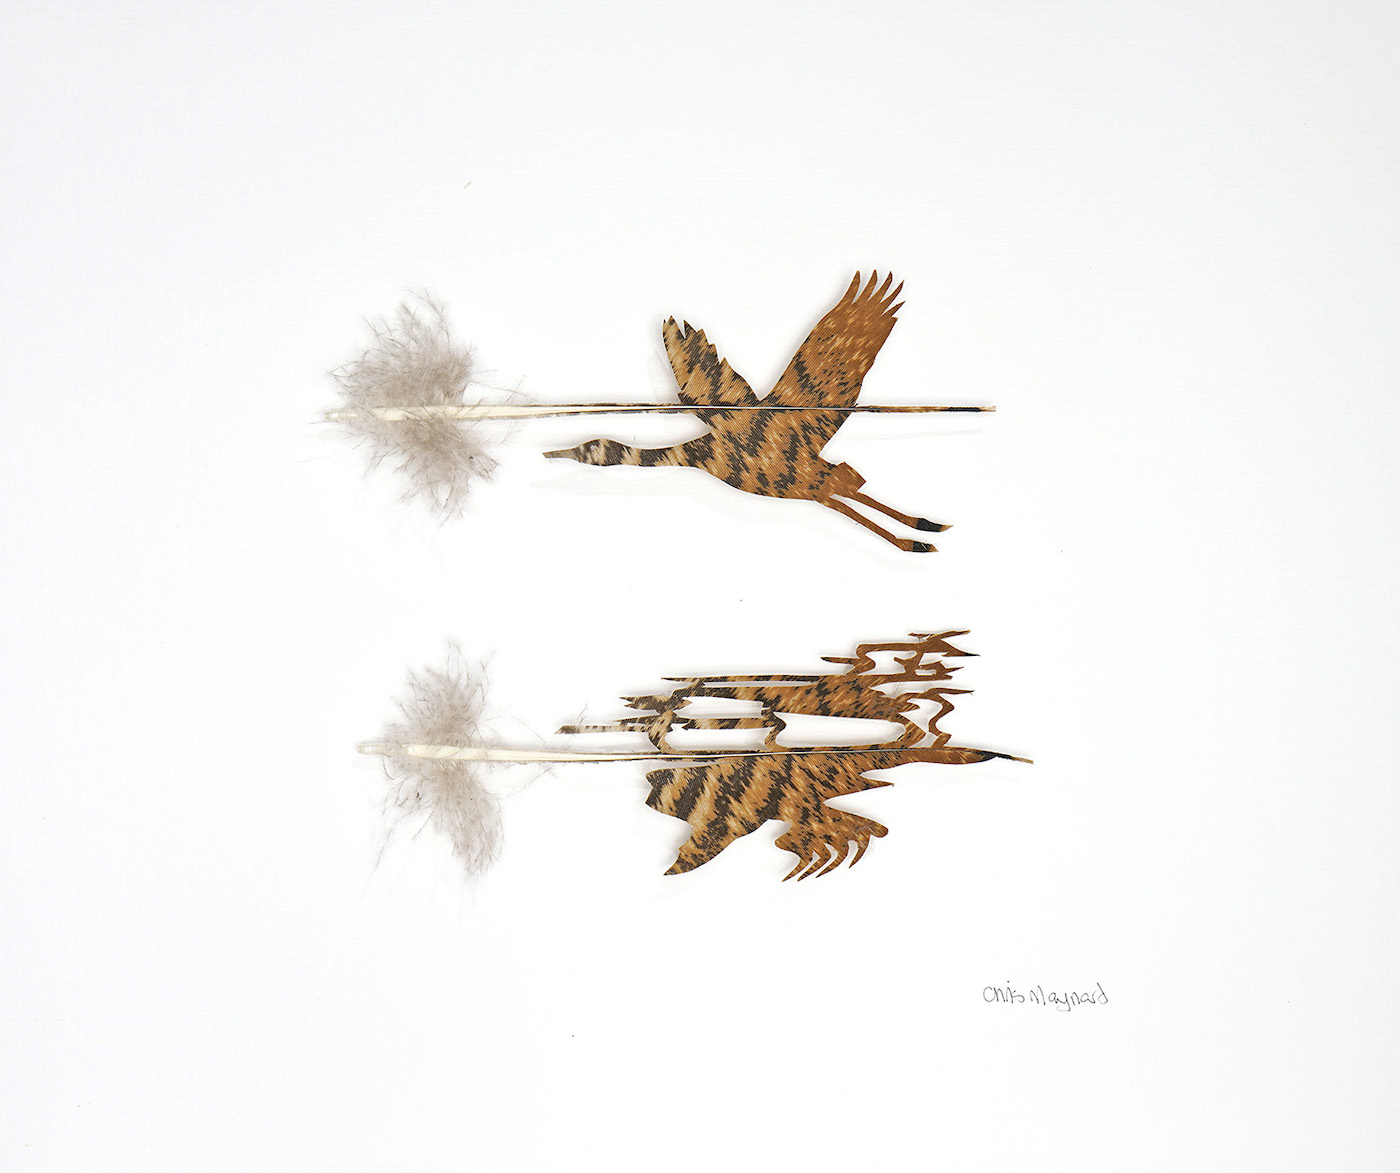 2020 Chris Maynard Reflection No. 5 12x15 inches turkey feather artwork